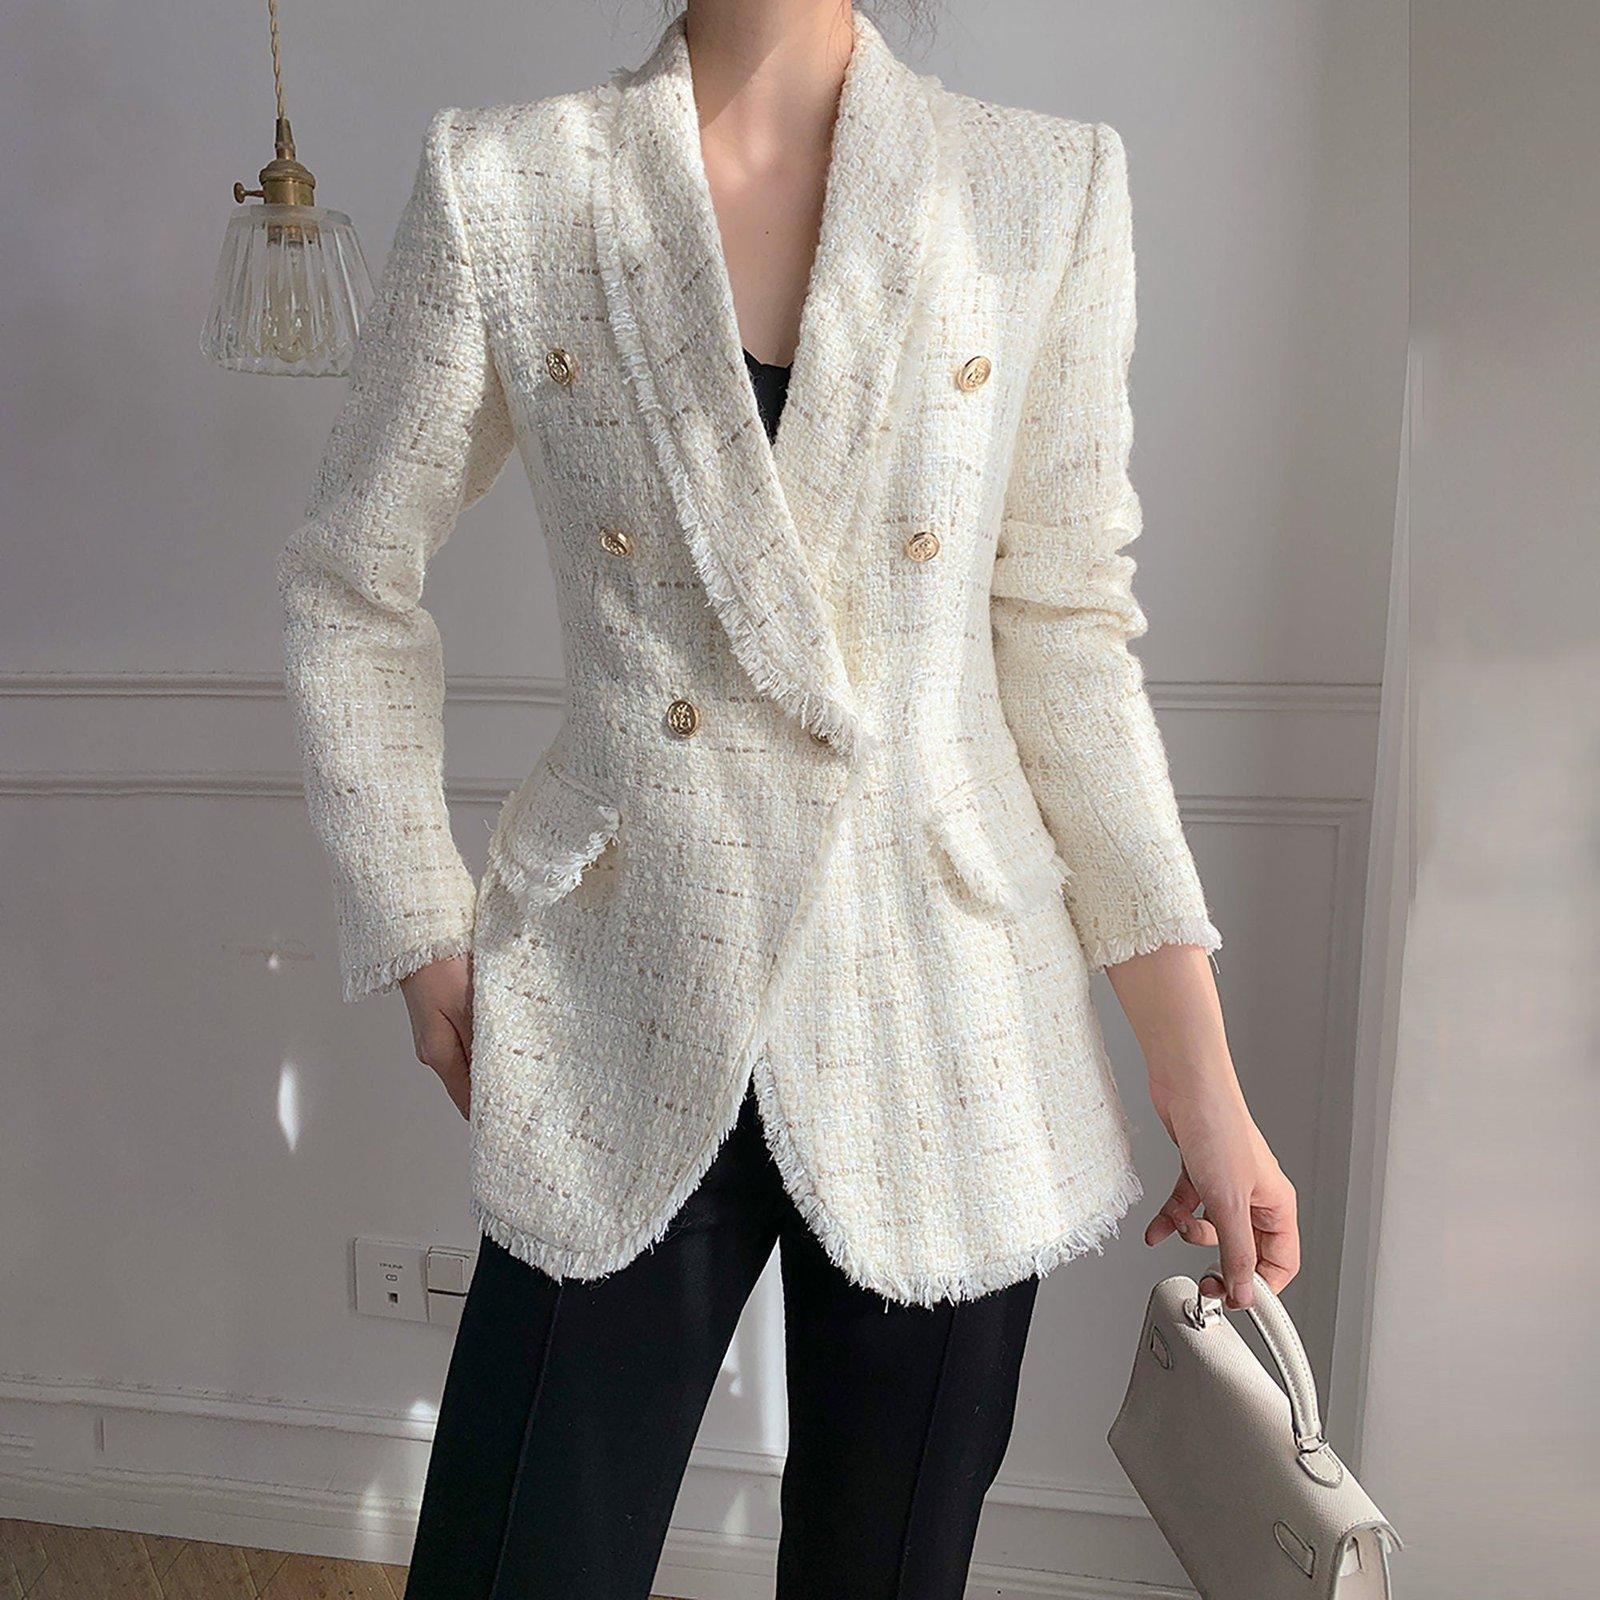 white tweed blazer